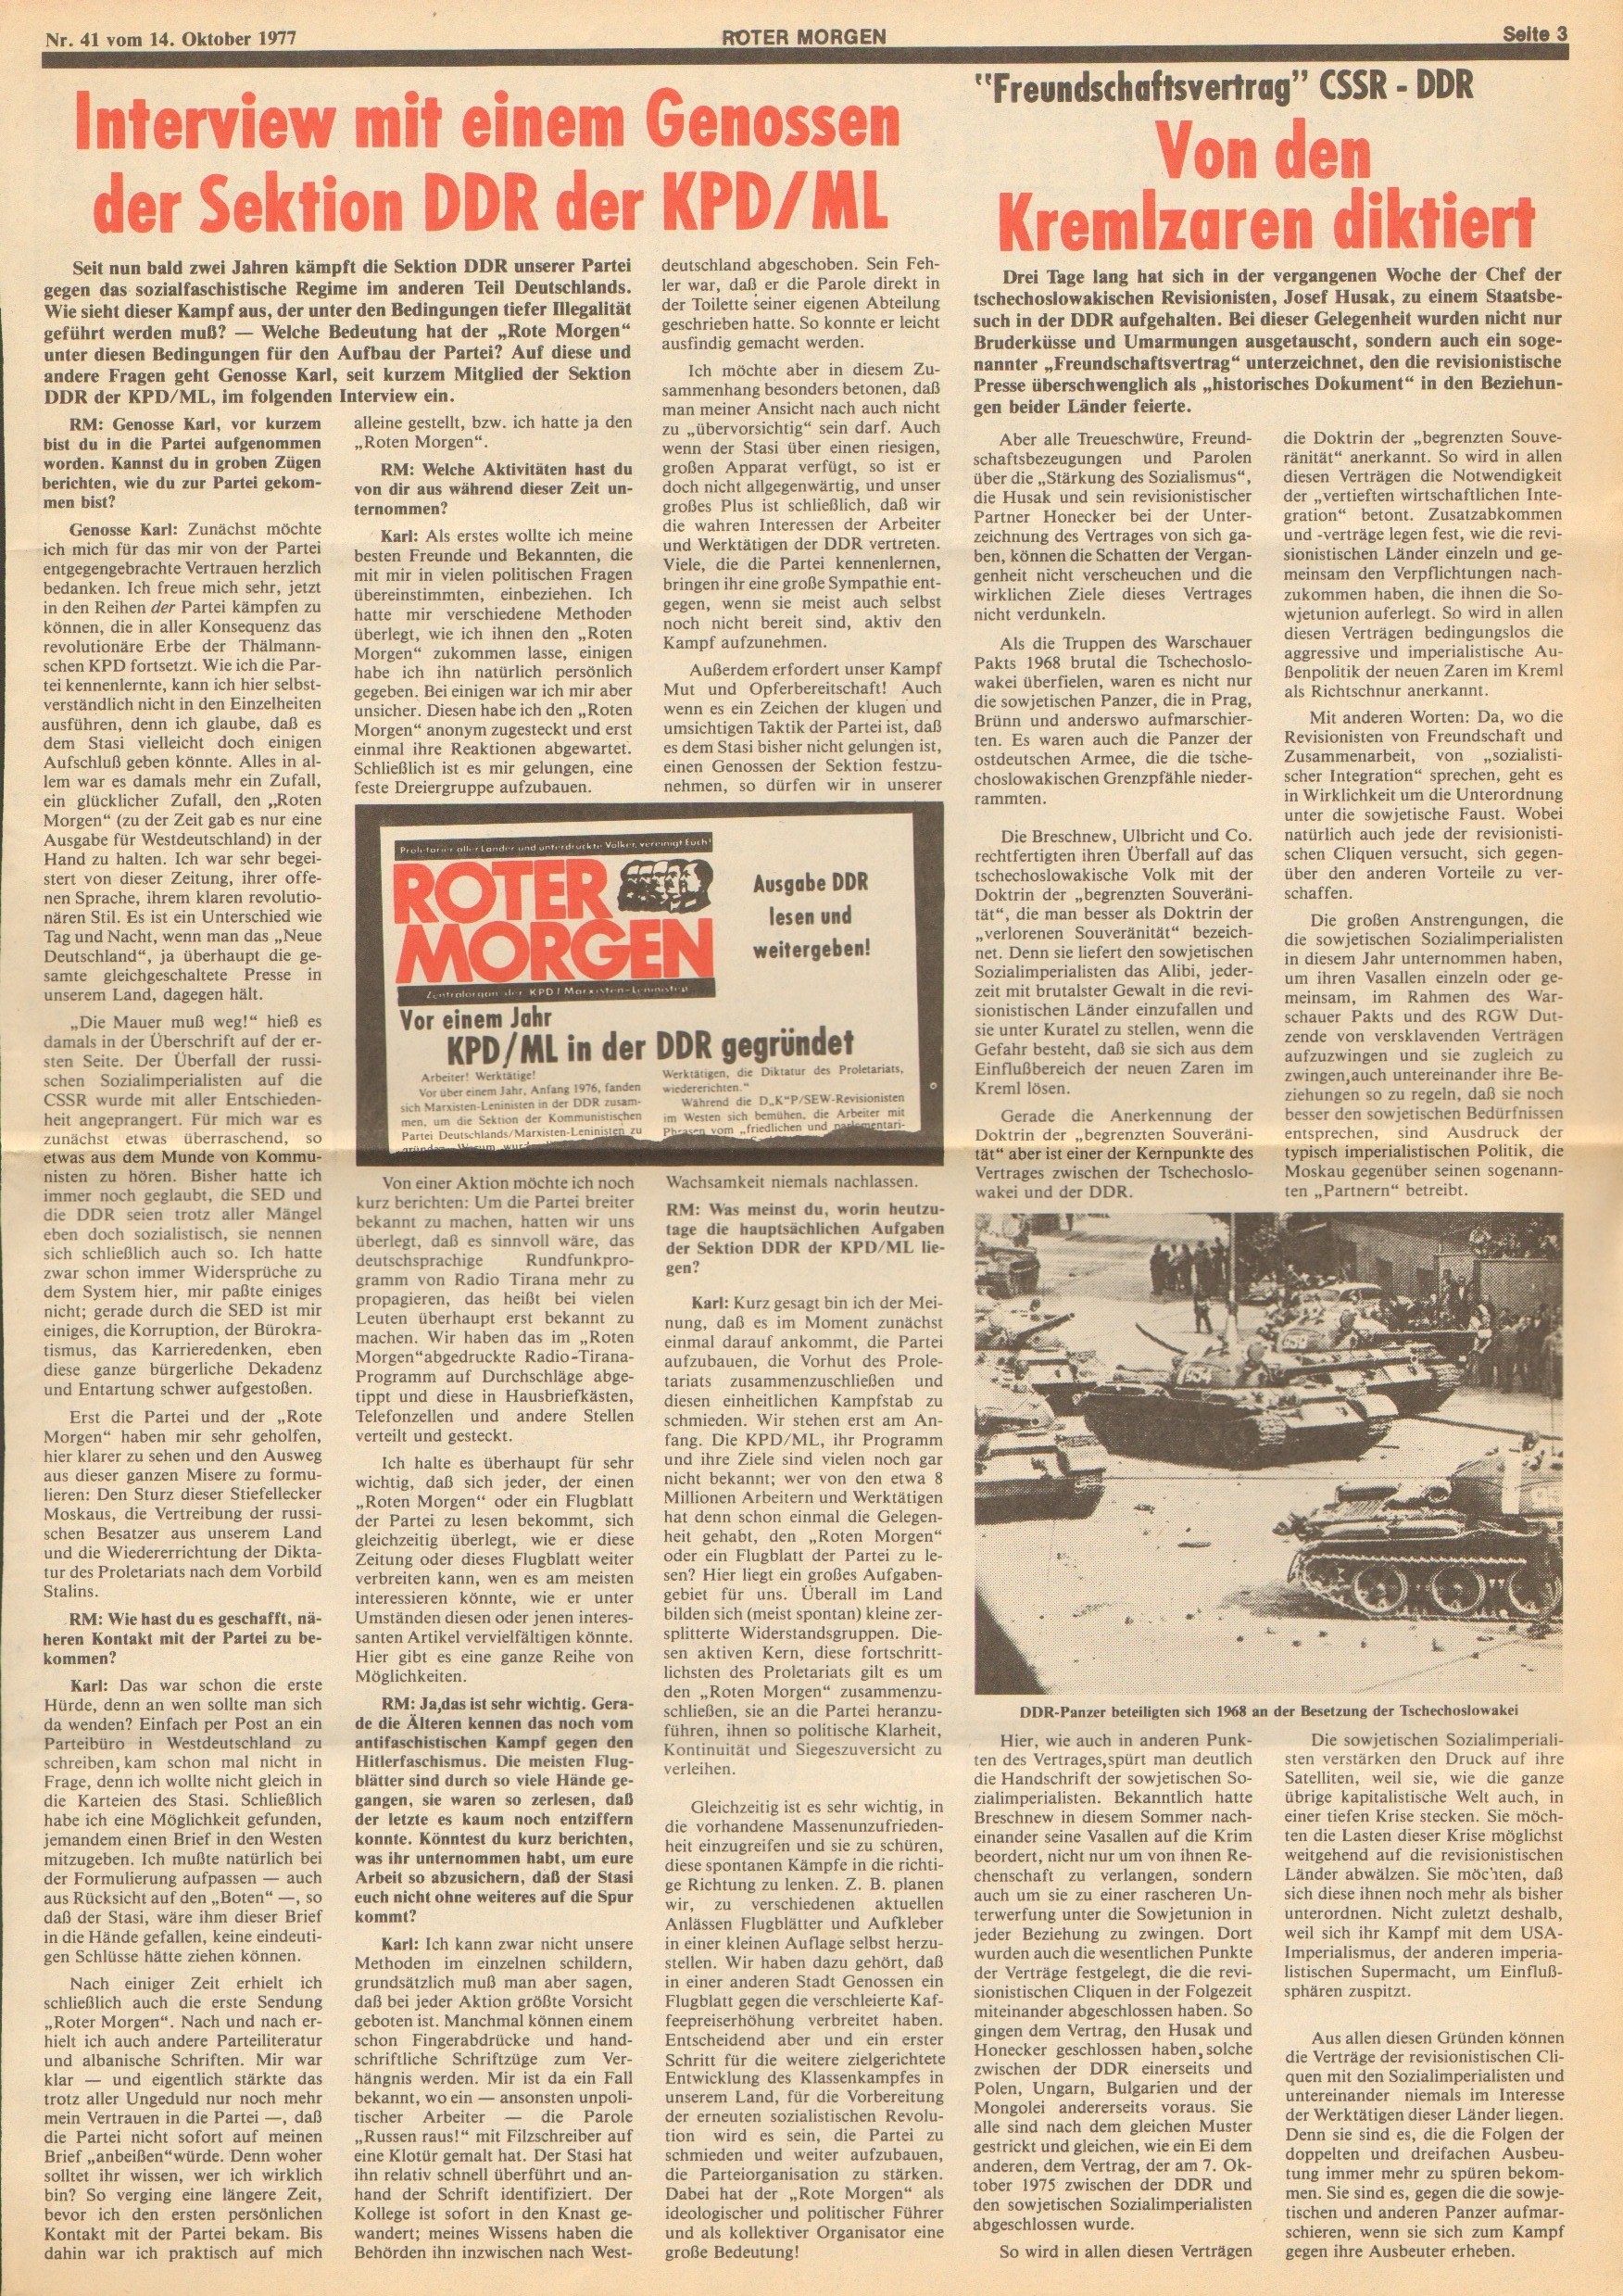 Roter Morgen, 11. Jg., 14. Oktober 1977, Nr. 41, Seite 3